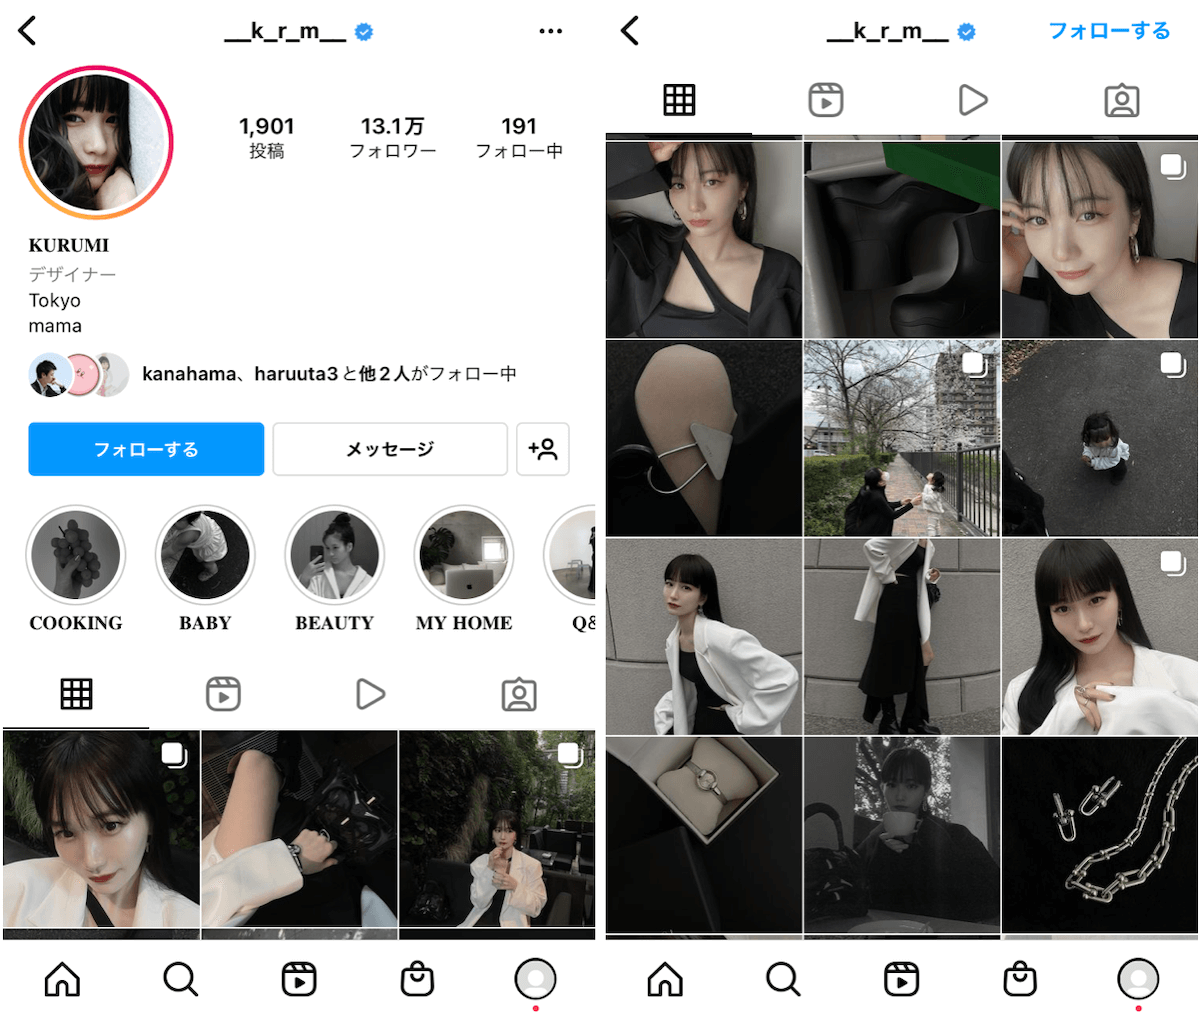 instagram-accessory-influencer-kurumi